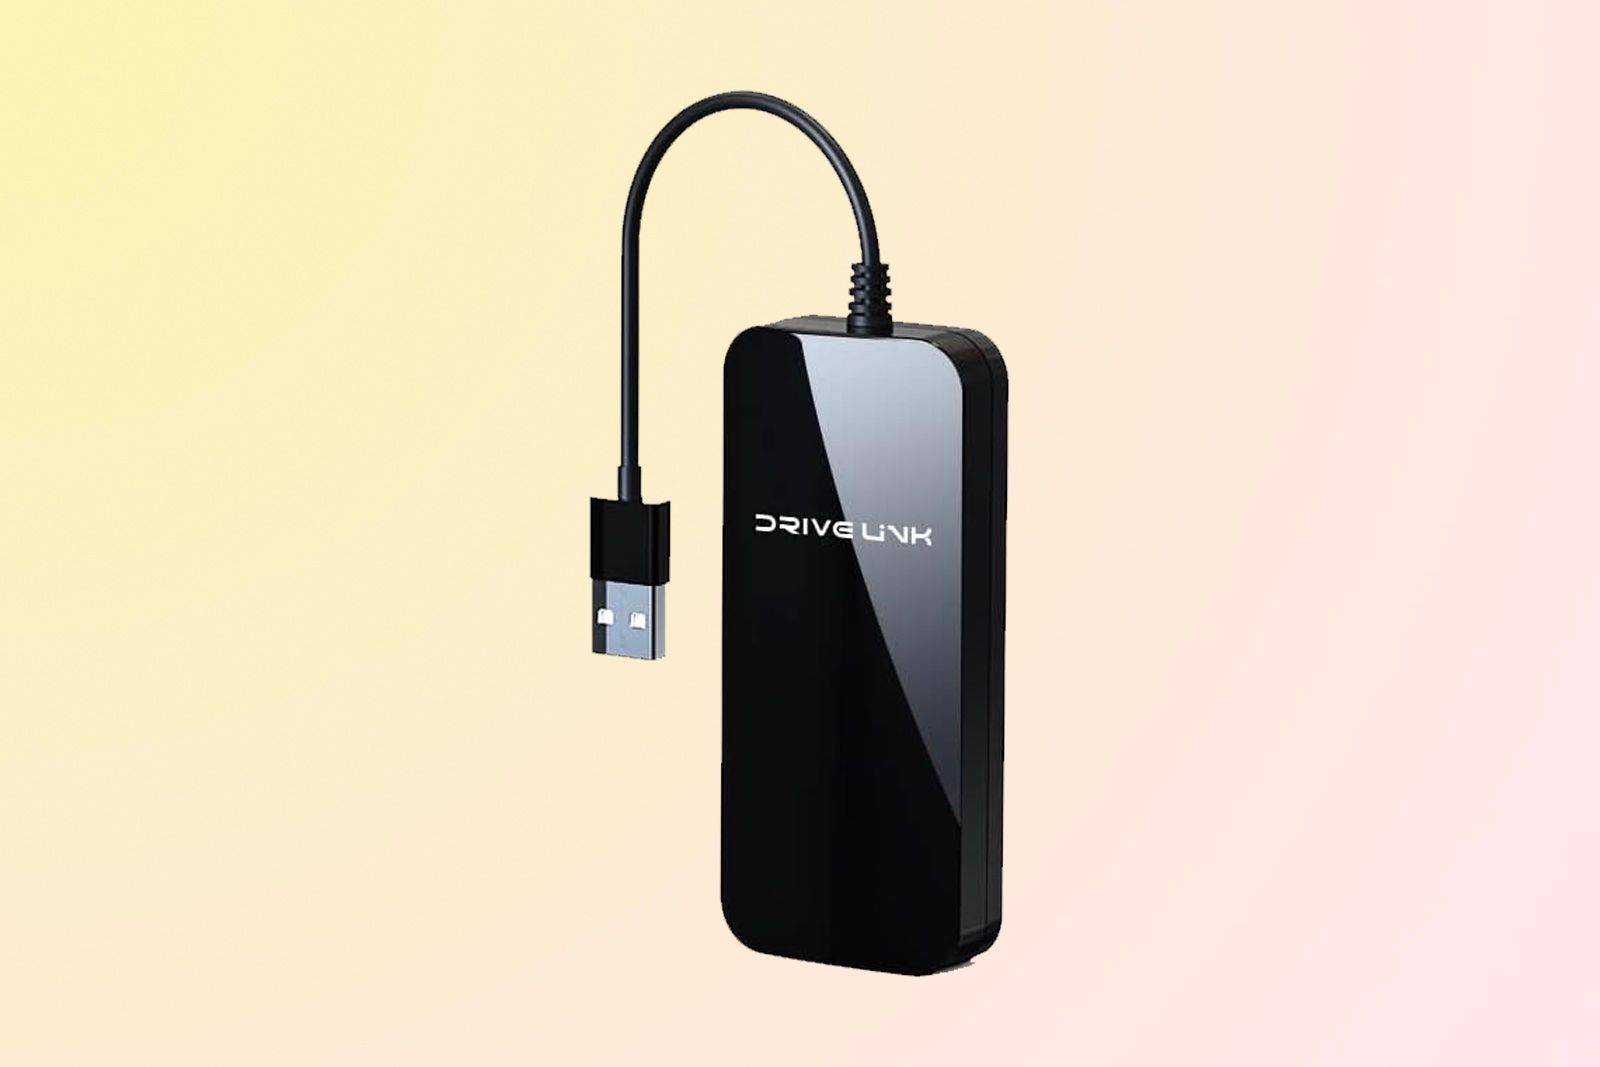 Cplay2air Drive Link wireless Apple CarPlay adapter